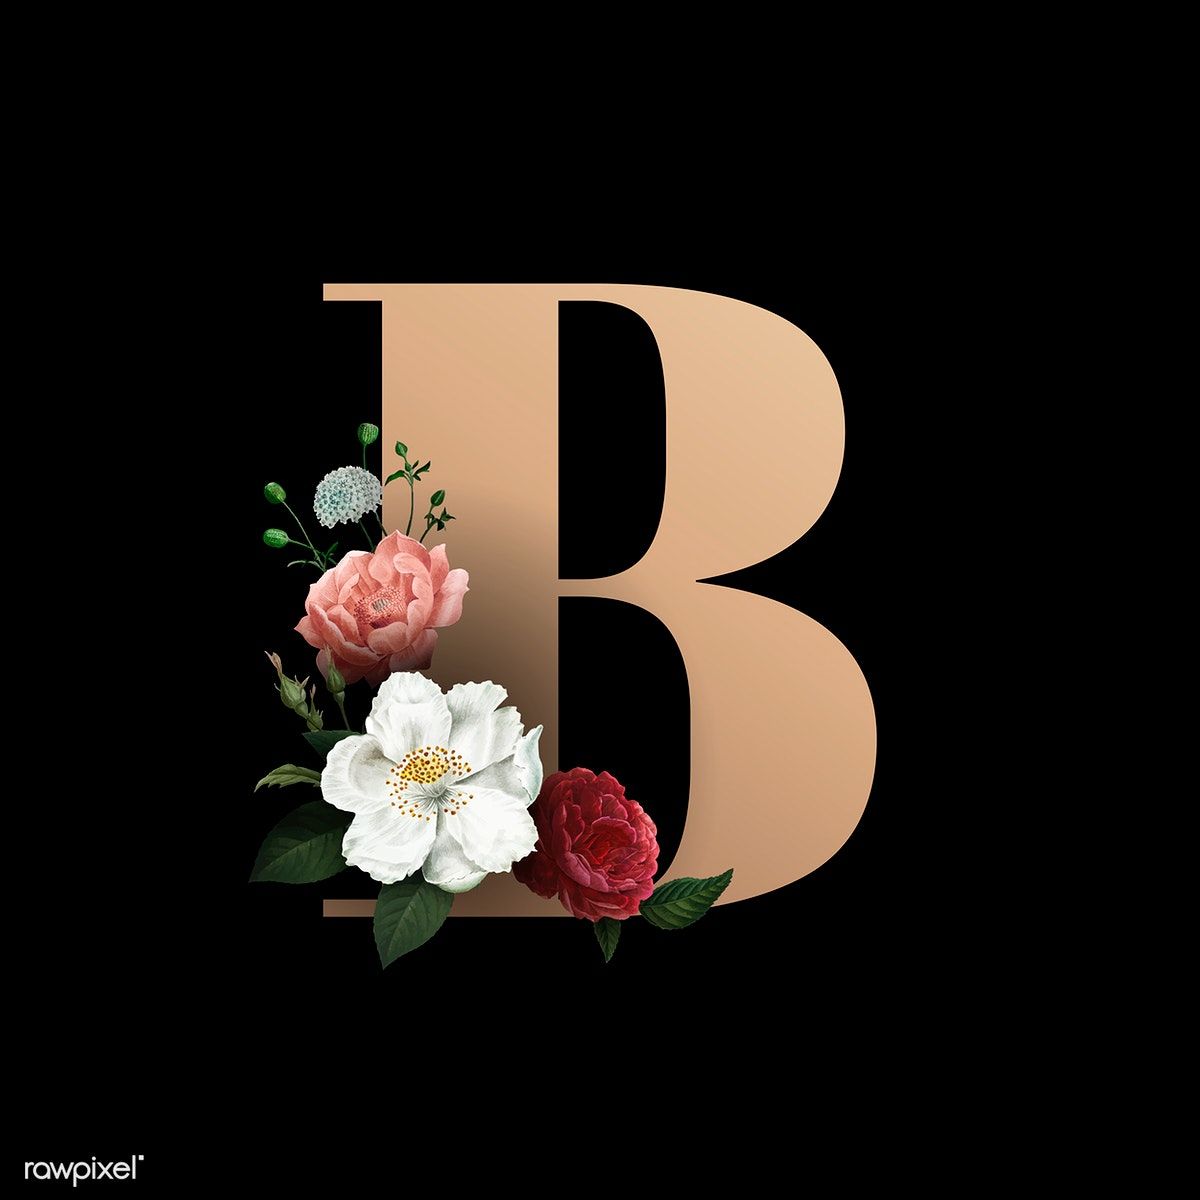 B Letter - HD Wallpaper 